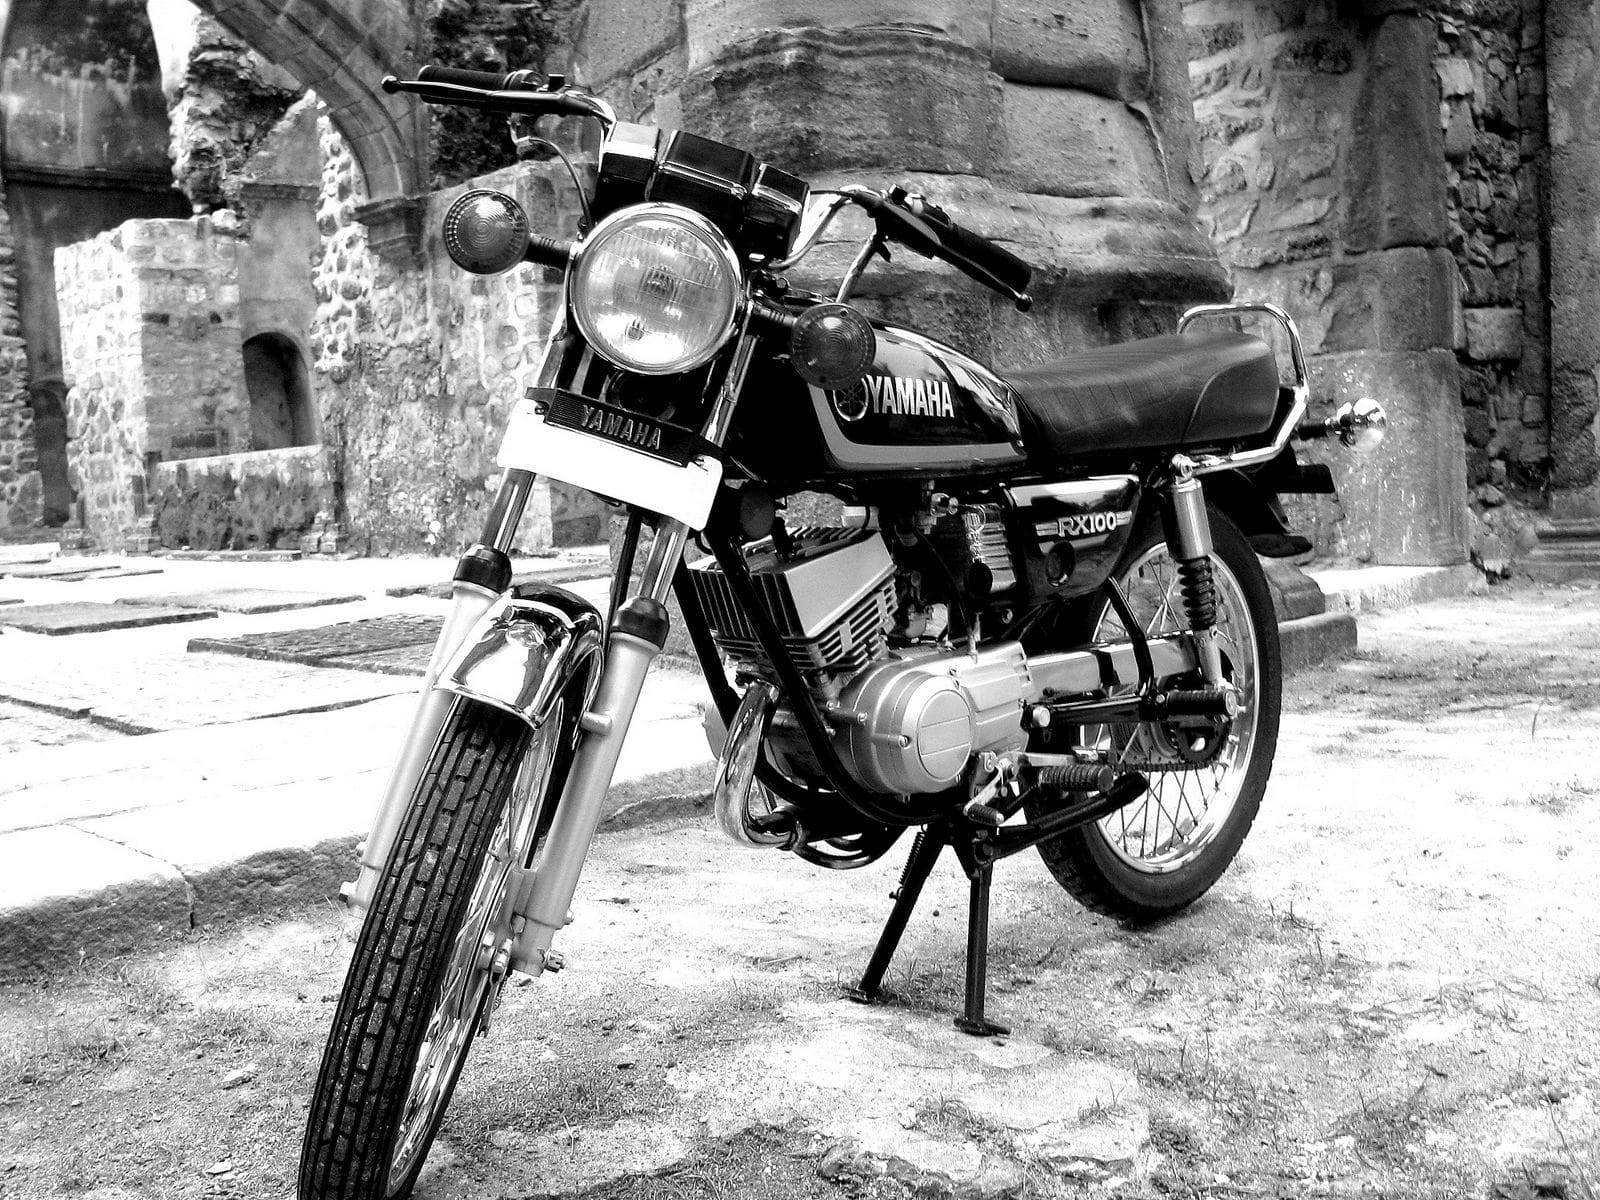 Yamaha Rx100 Motorcycle Black And White Wallpaper